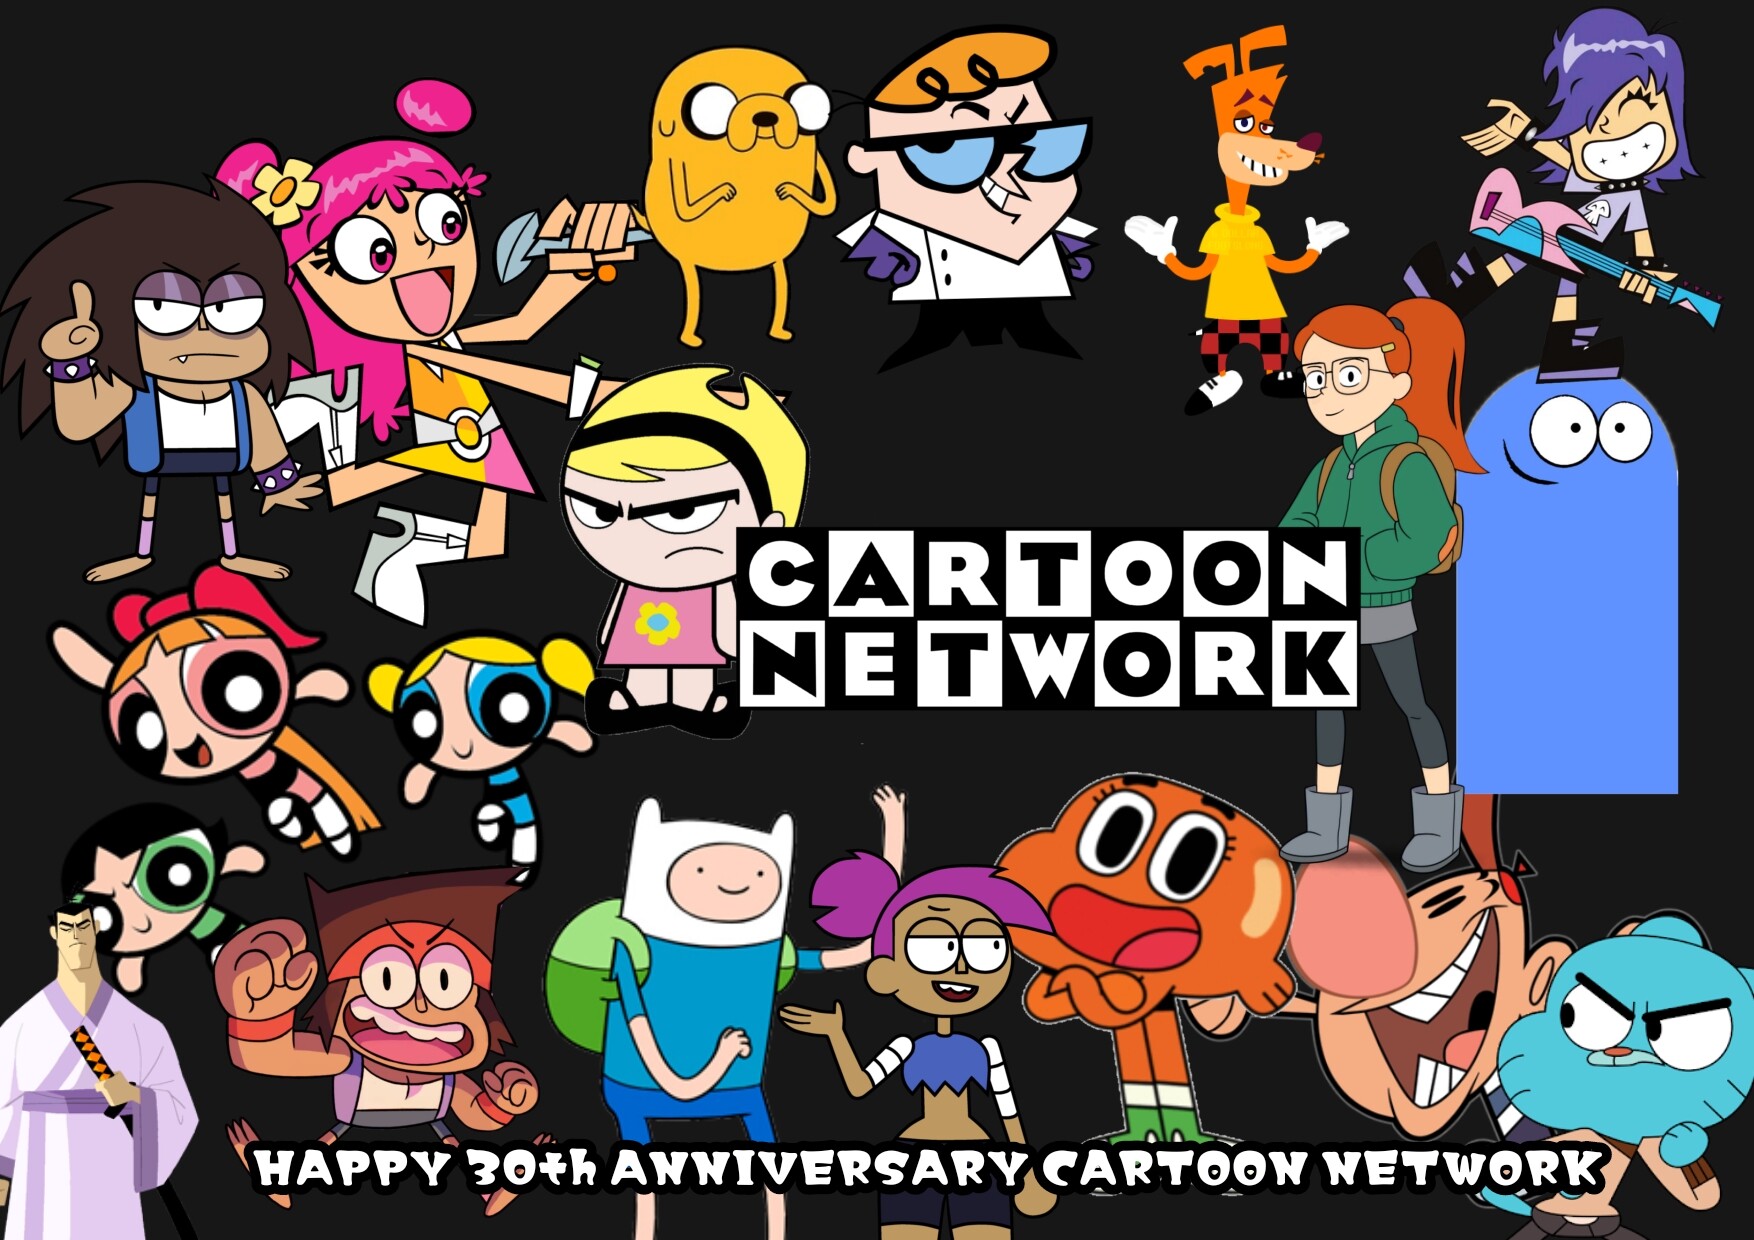 ArtStation - Happy 30th Anniversary Cartoon Network